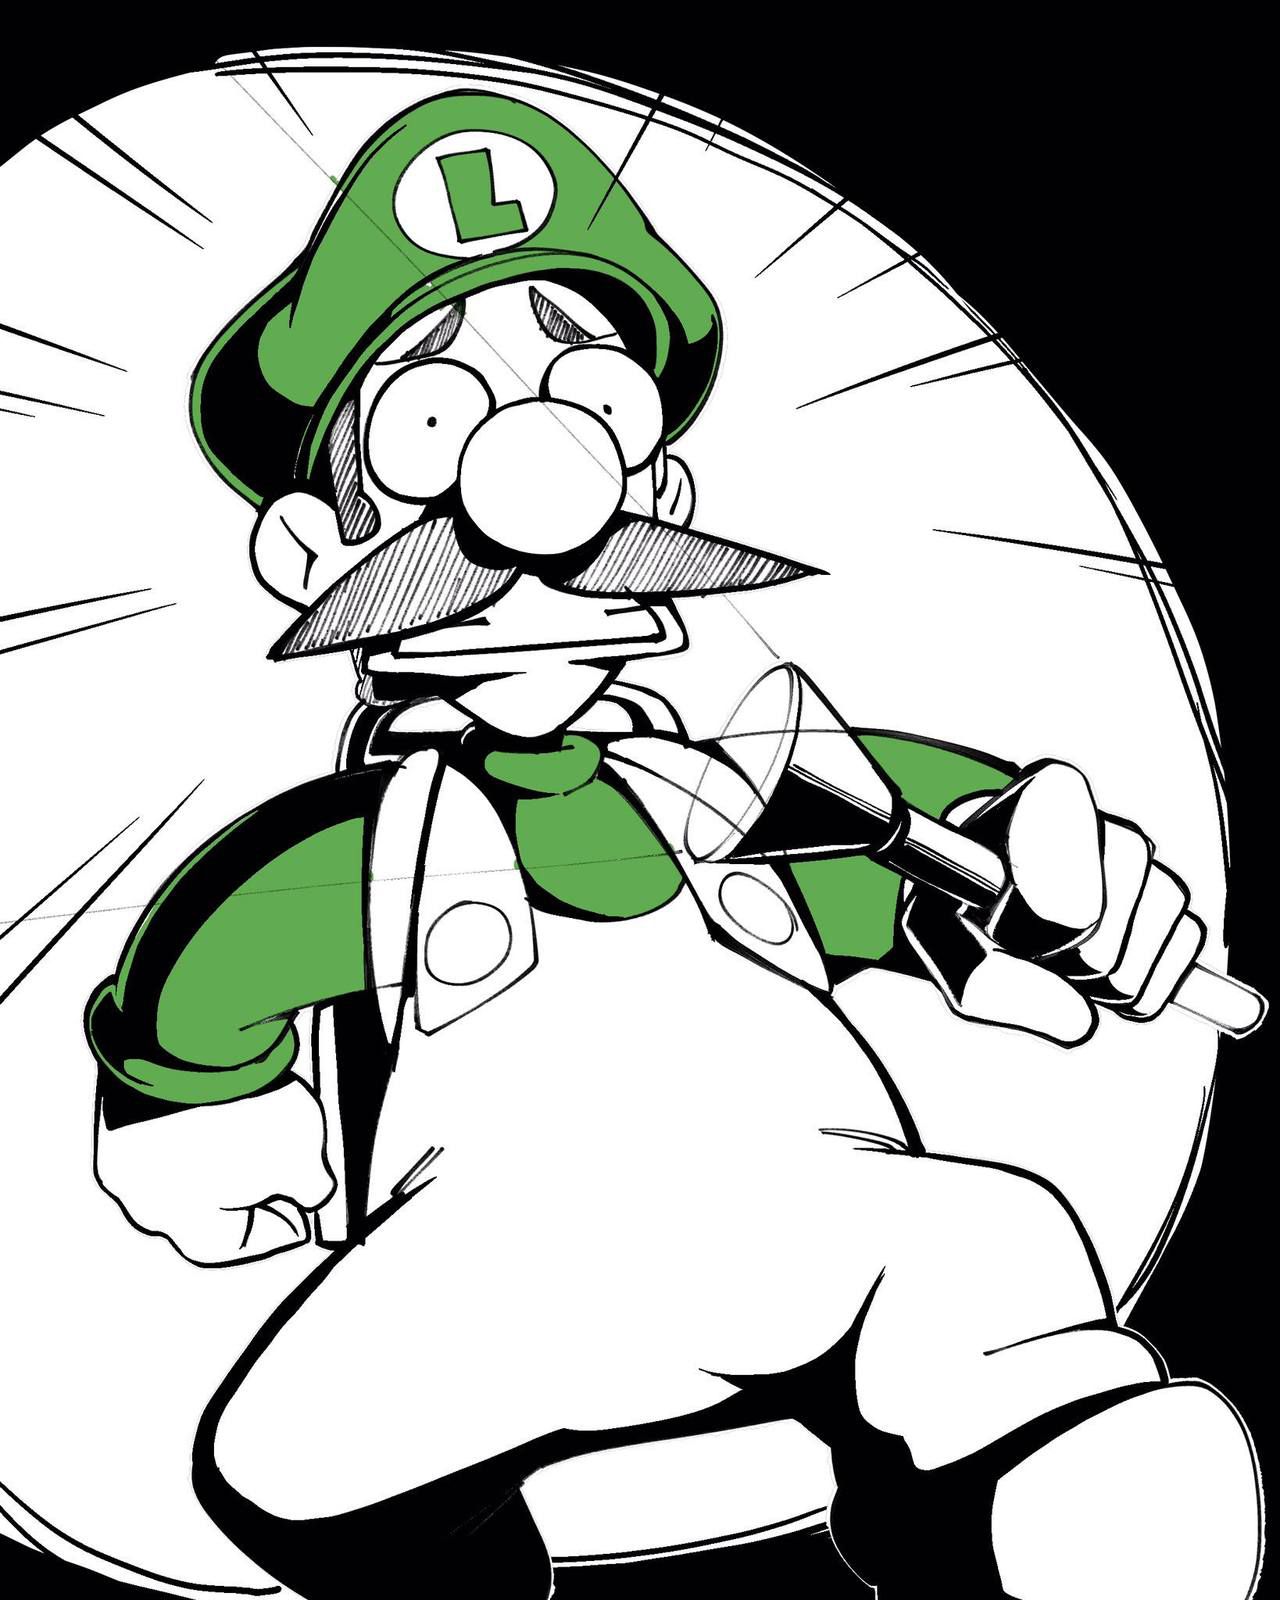 [Nisego] Inktober 2 - Luigi's Mansion (Super Mario Bros.) [Ongoing] 22